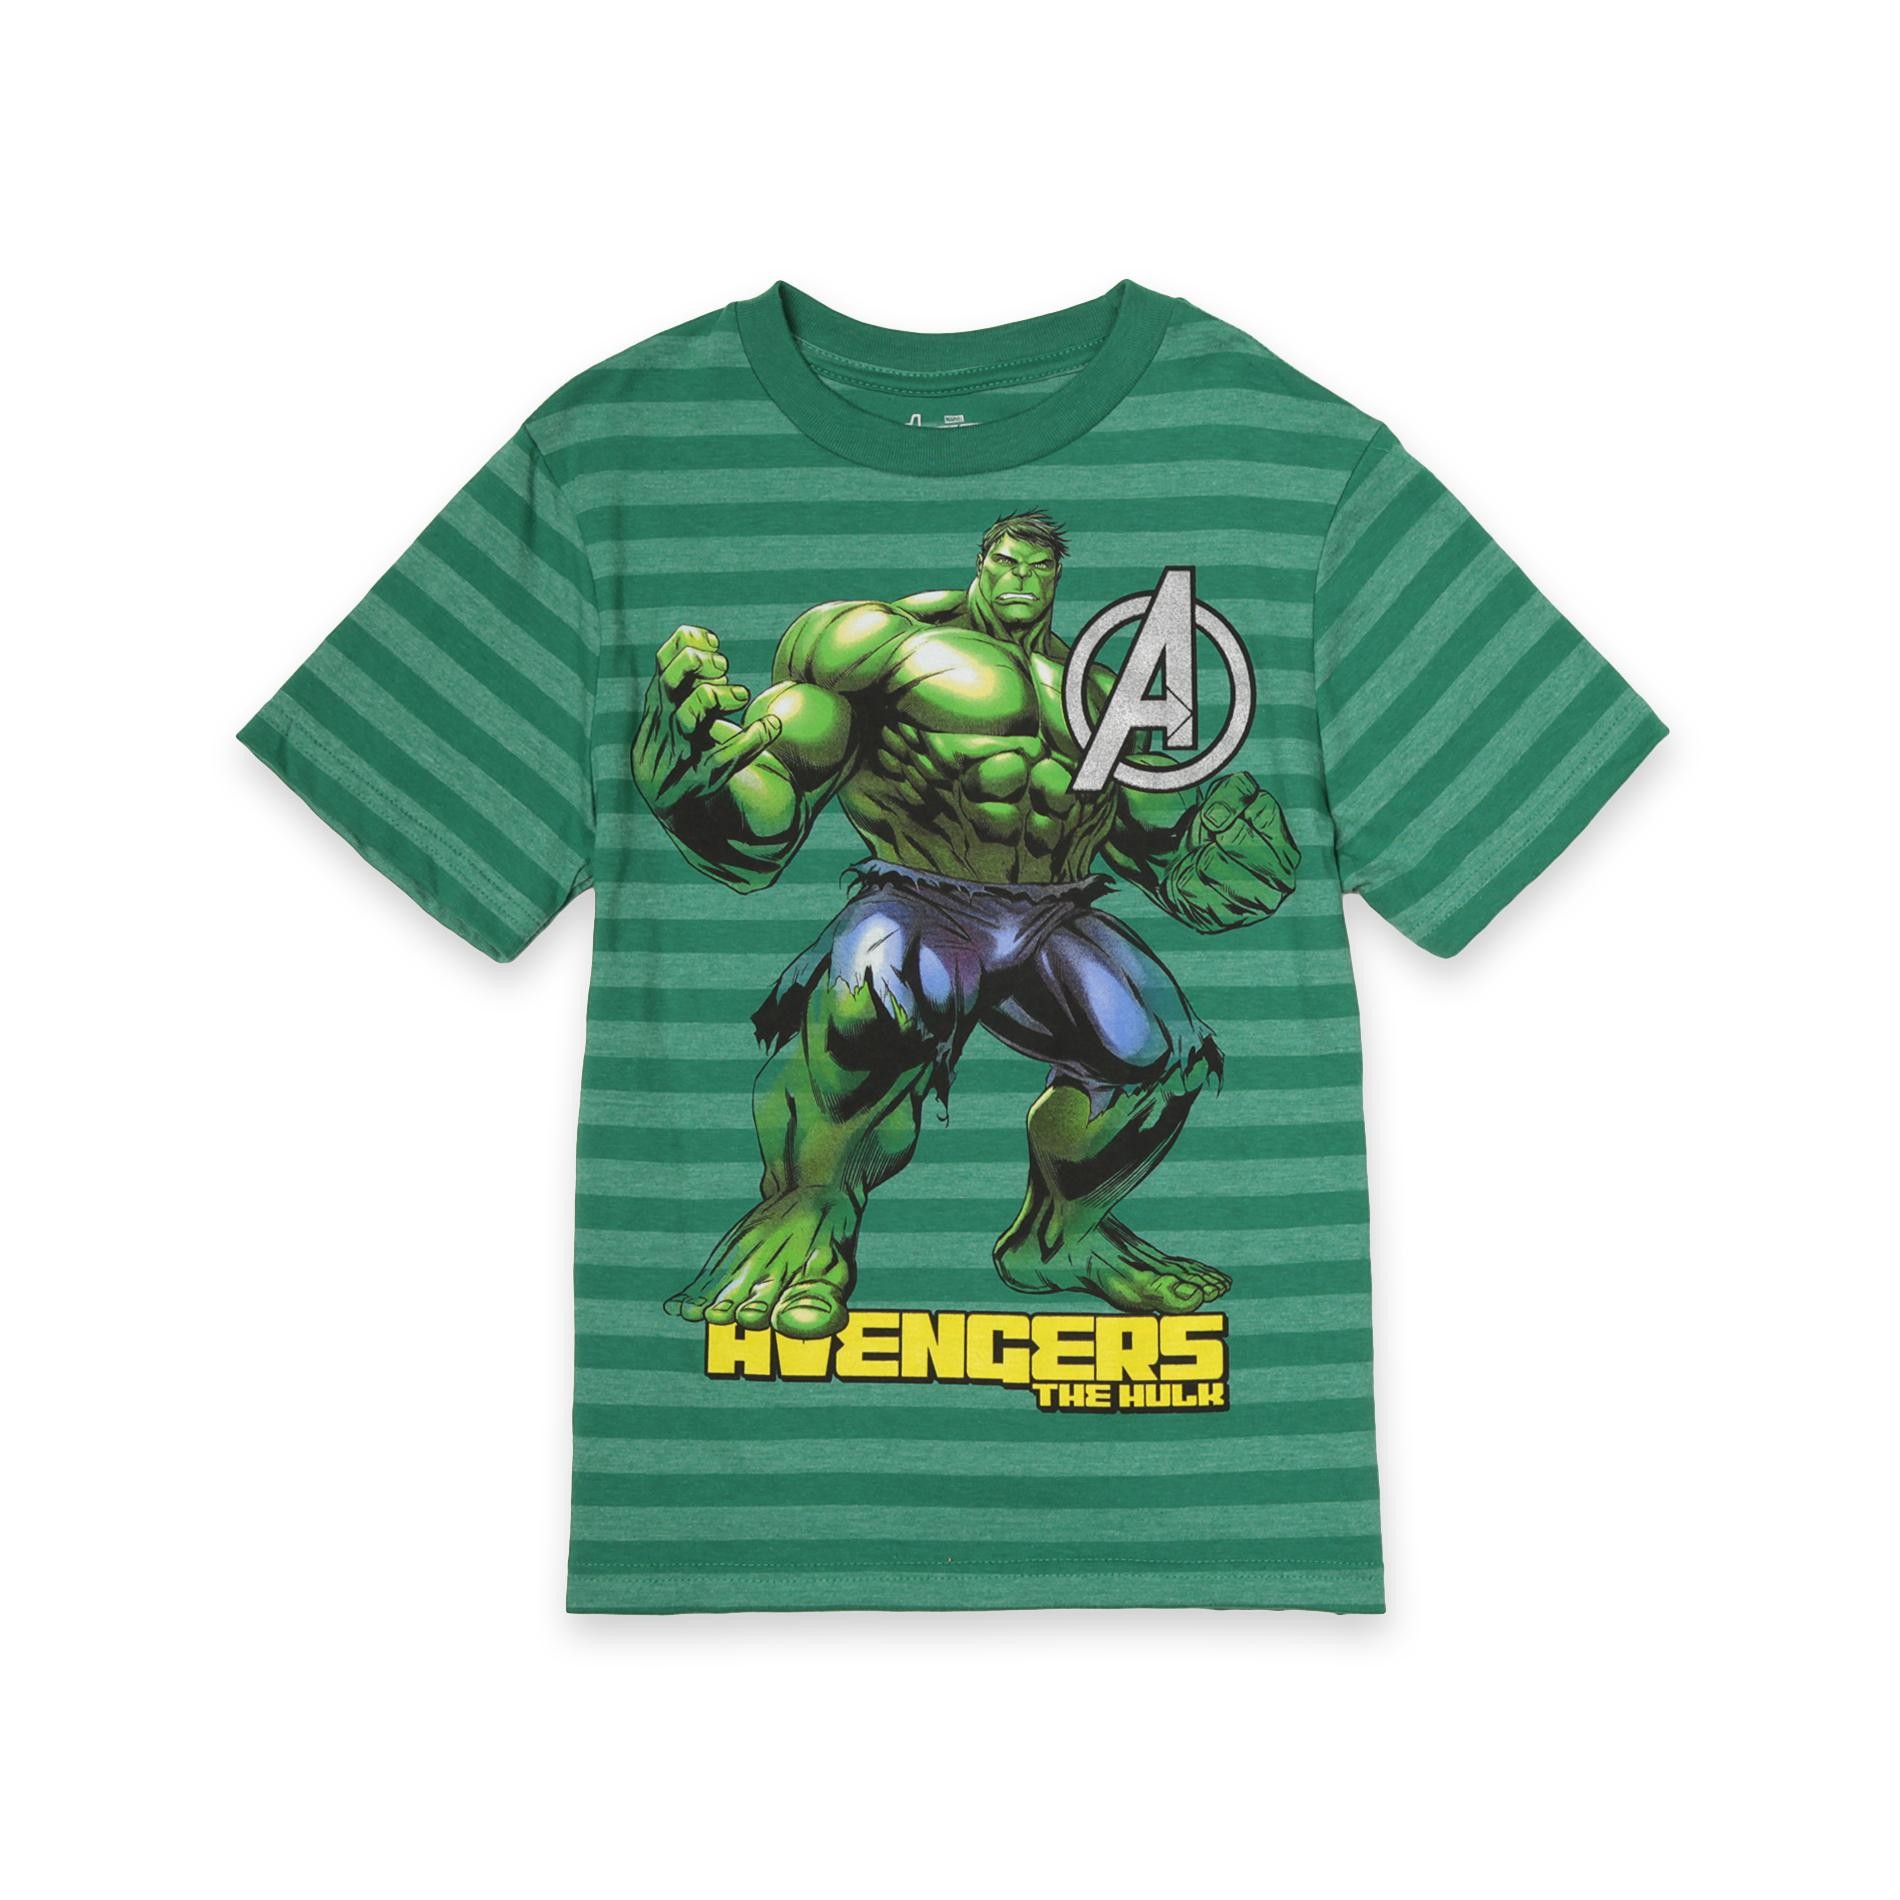 Marvel Boy's Graphic T-Shirt - Avengers The Hulk